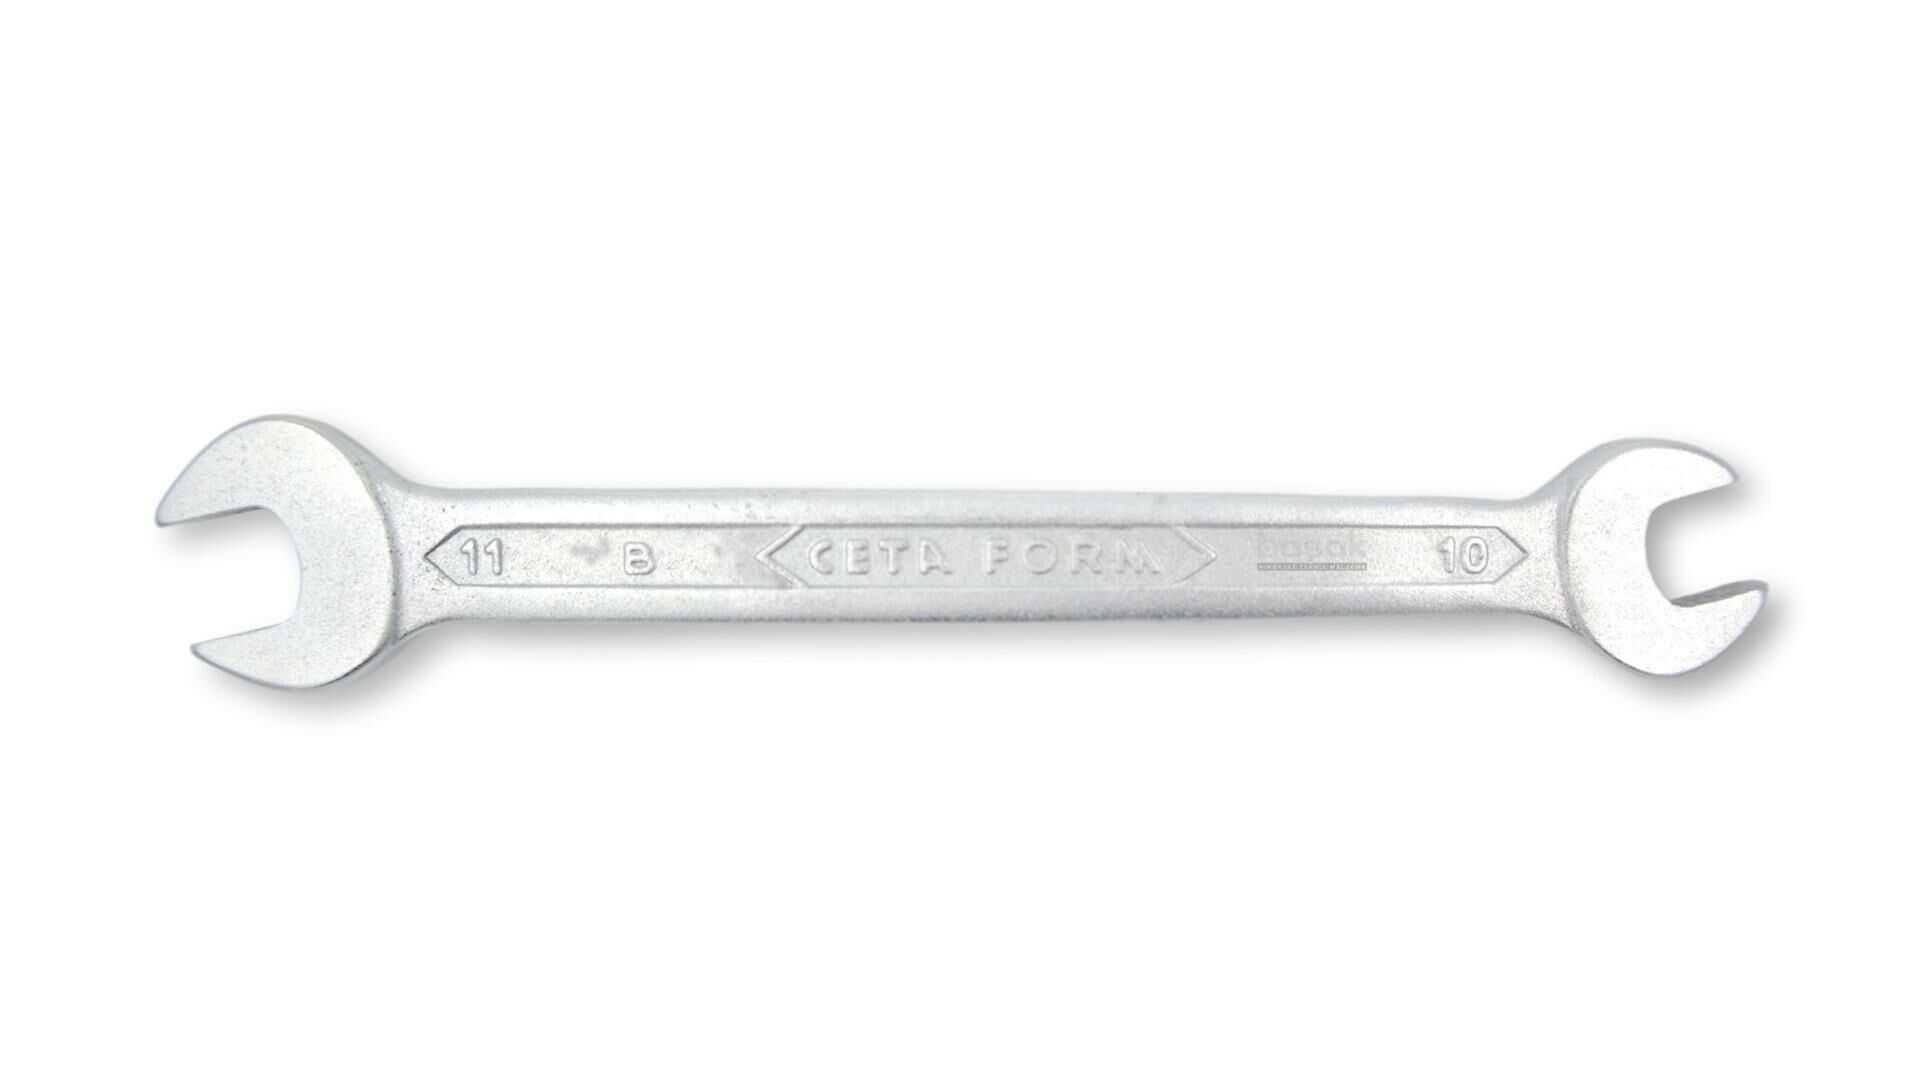 Ceta Form 10 x 11 mm Açık Ağız Anahtar B10-1011